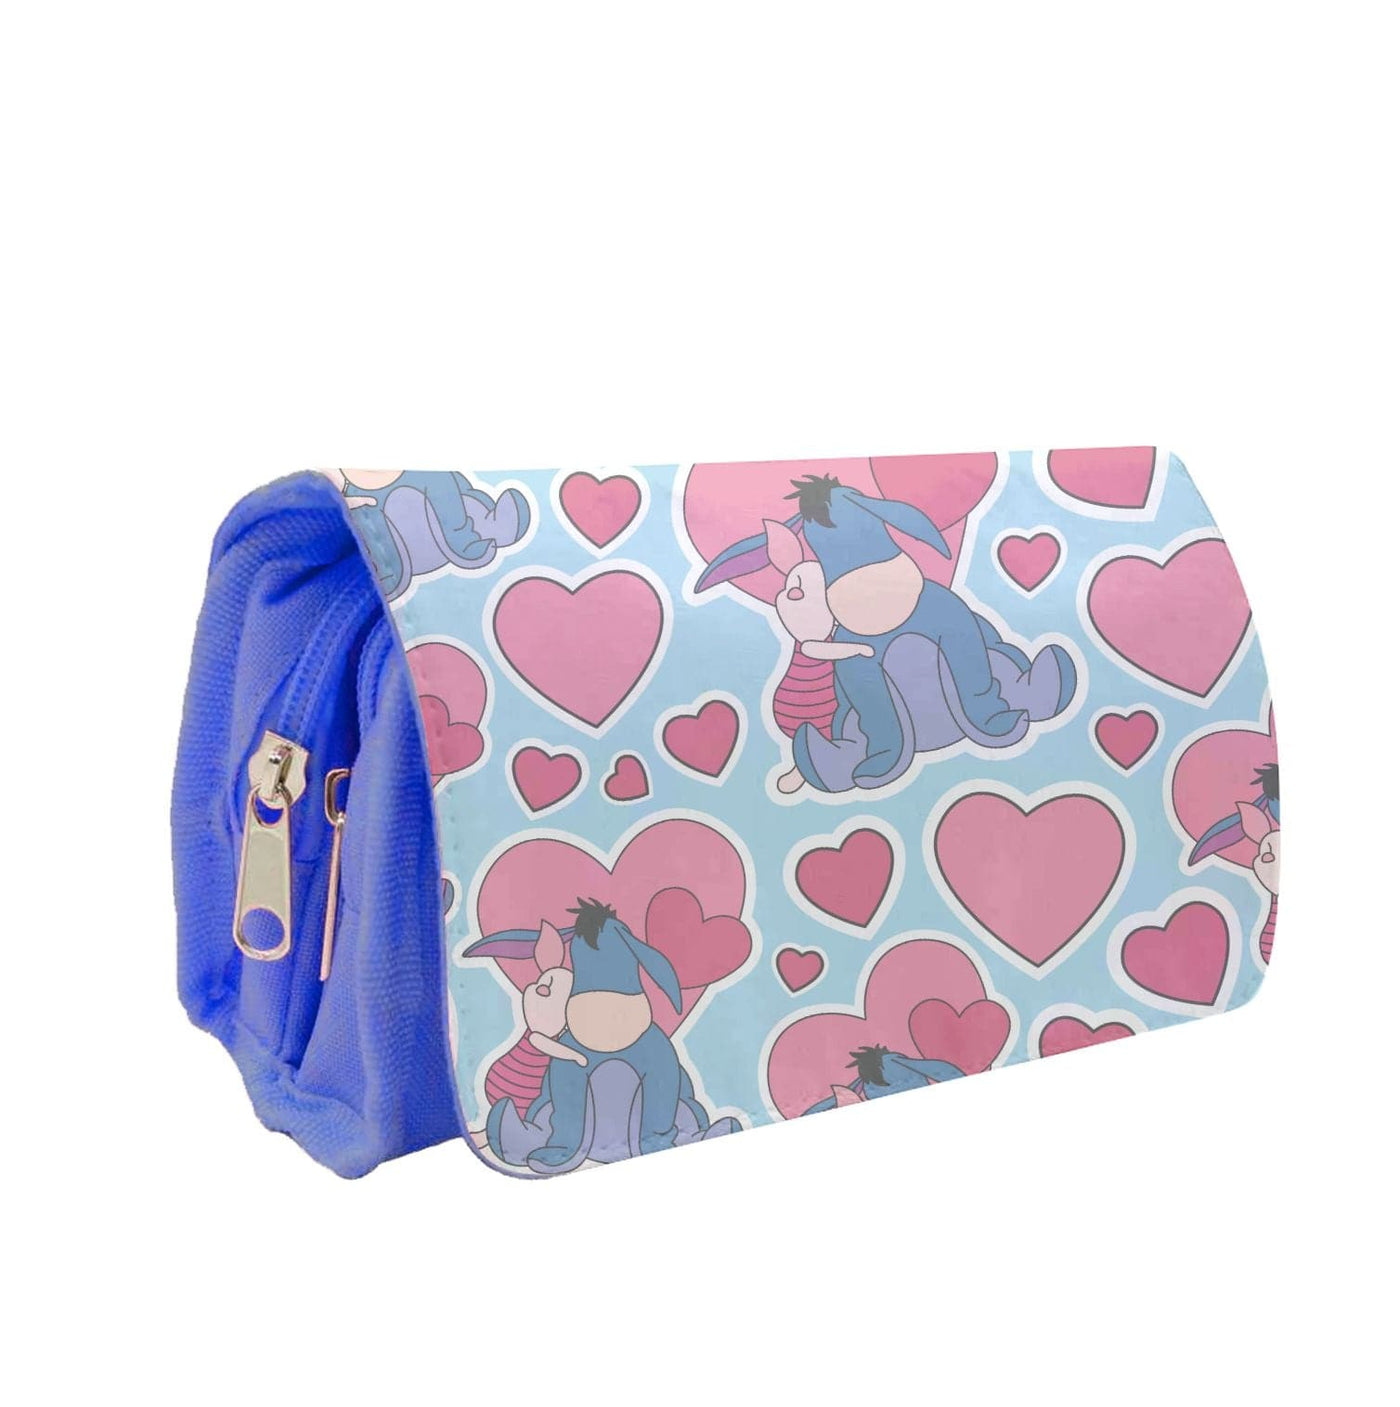 Eeore And Piglet Pattern - Disney Valentine's Pencil Case